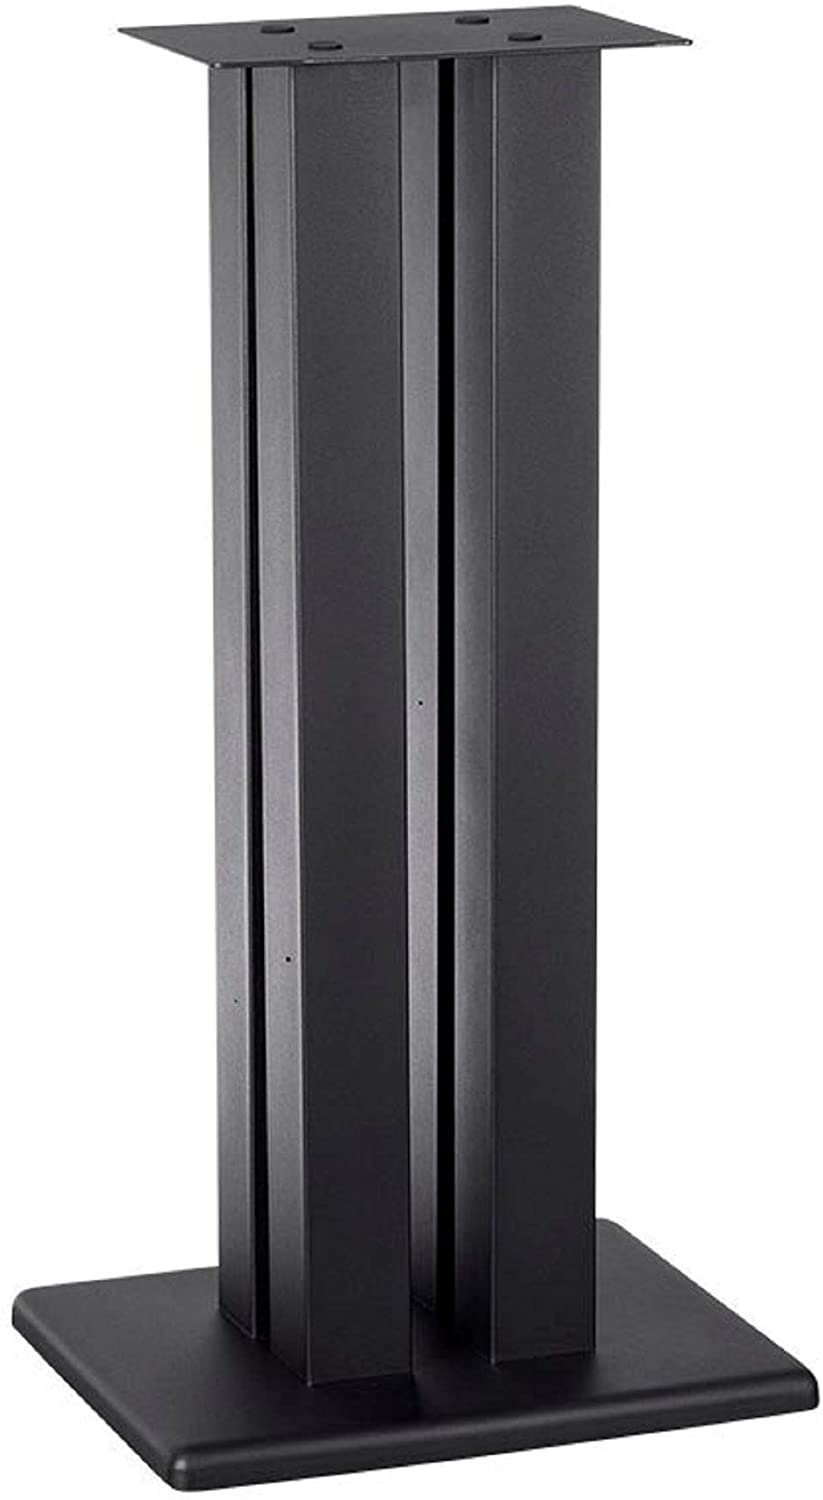 Monolith Speaker Stand